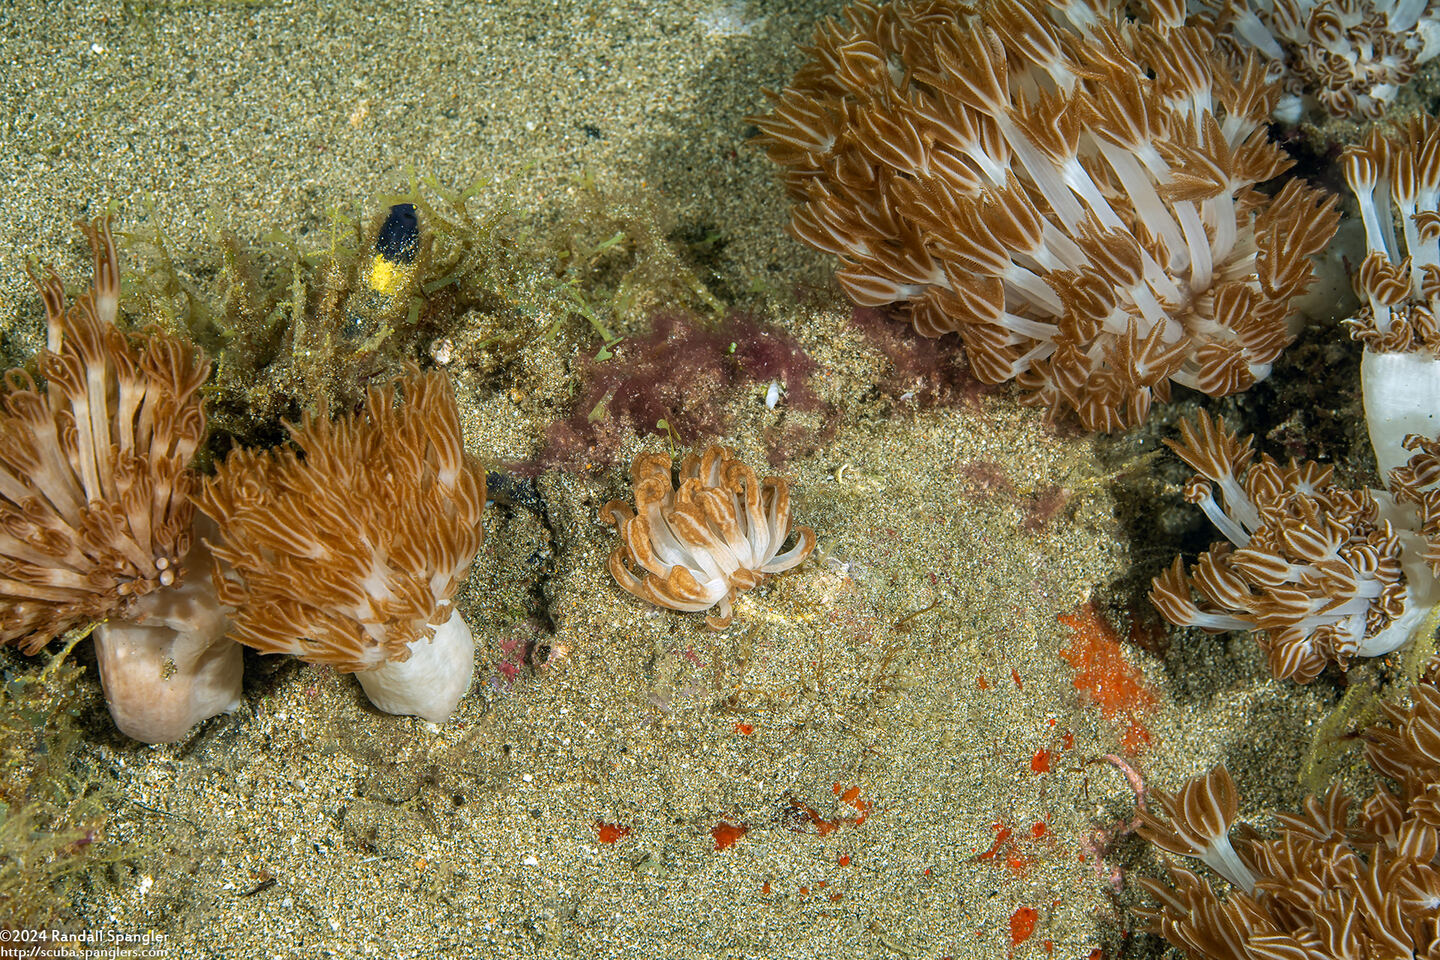 Phyllodesmium jakobsenae (Jakobsen’s Phyllodesmium); In center, surrounded by Xenia soft coral